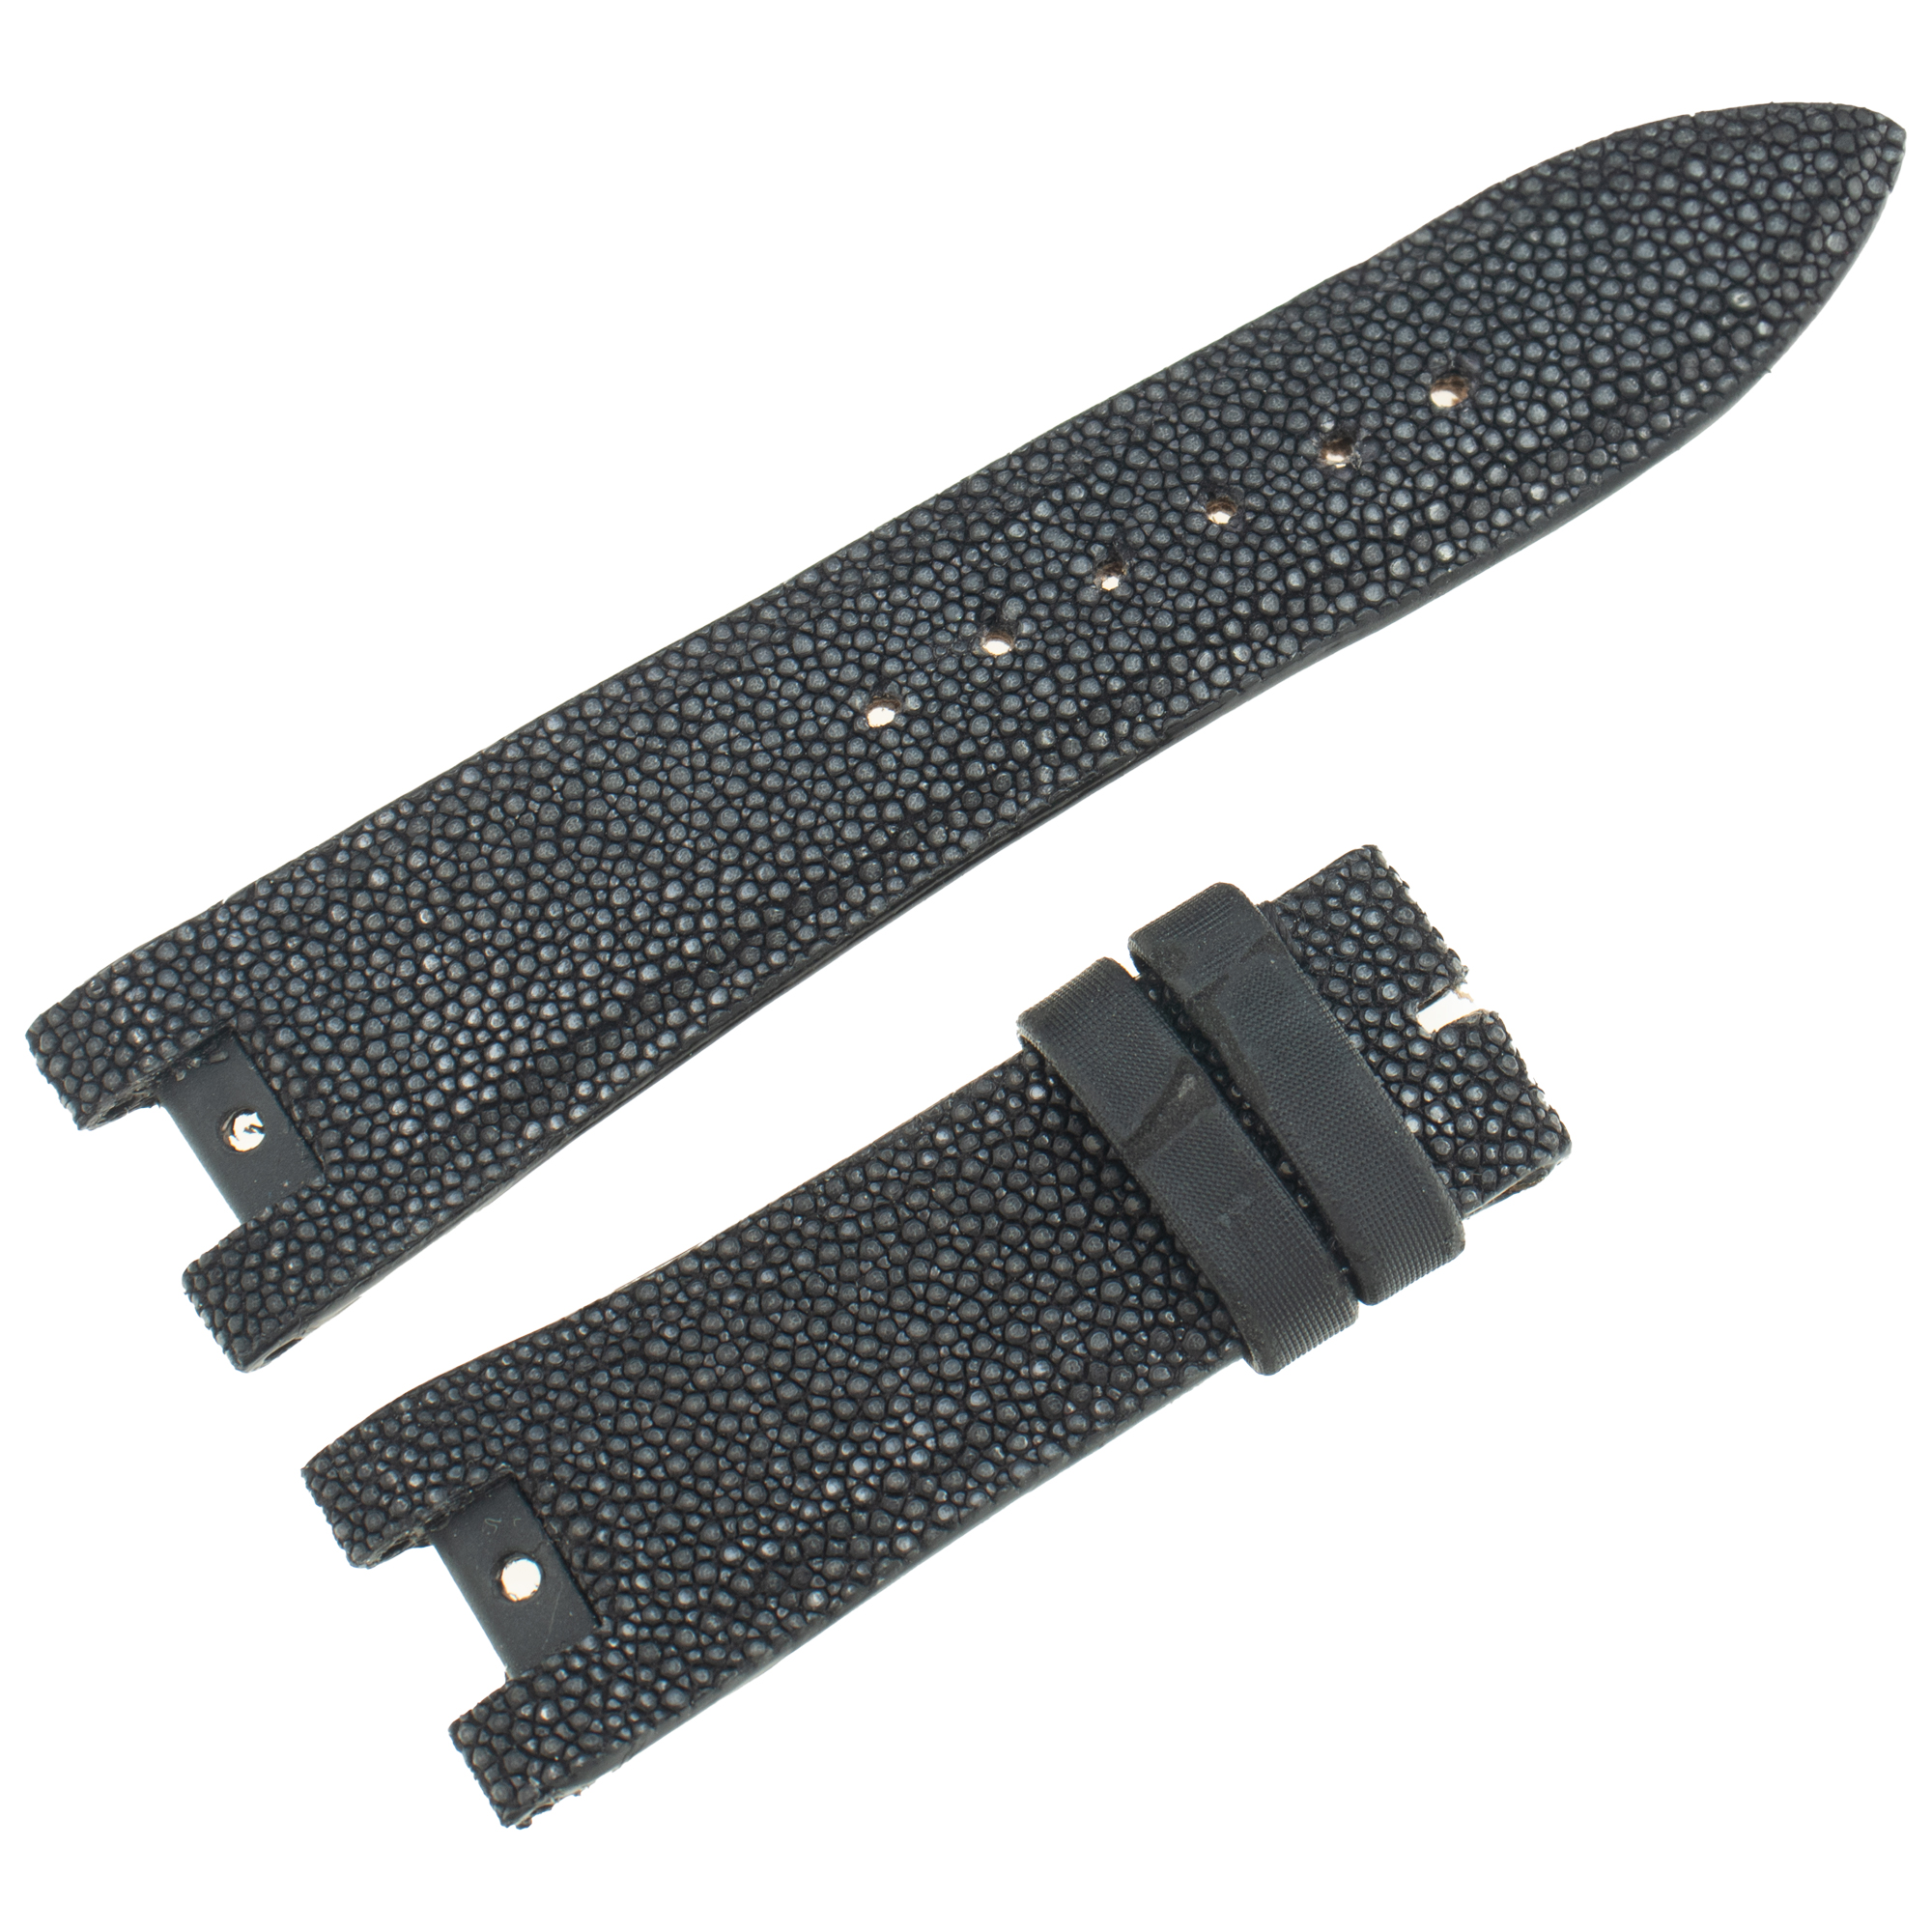 Ulysse Nardin Black Leather Strap fits Caprice Model